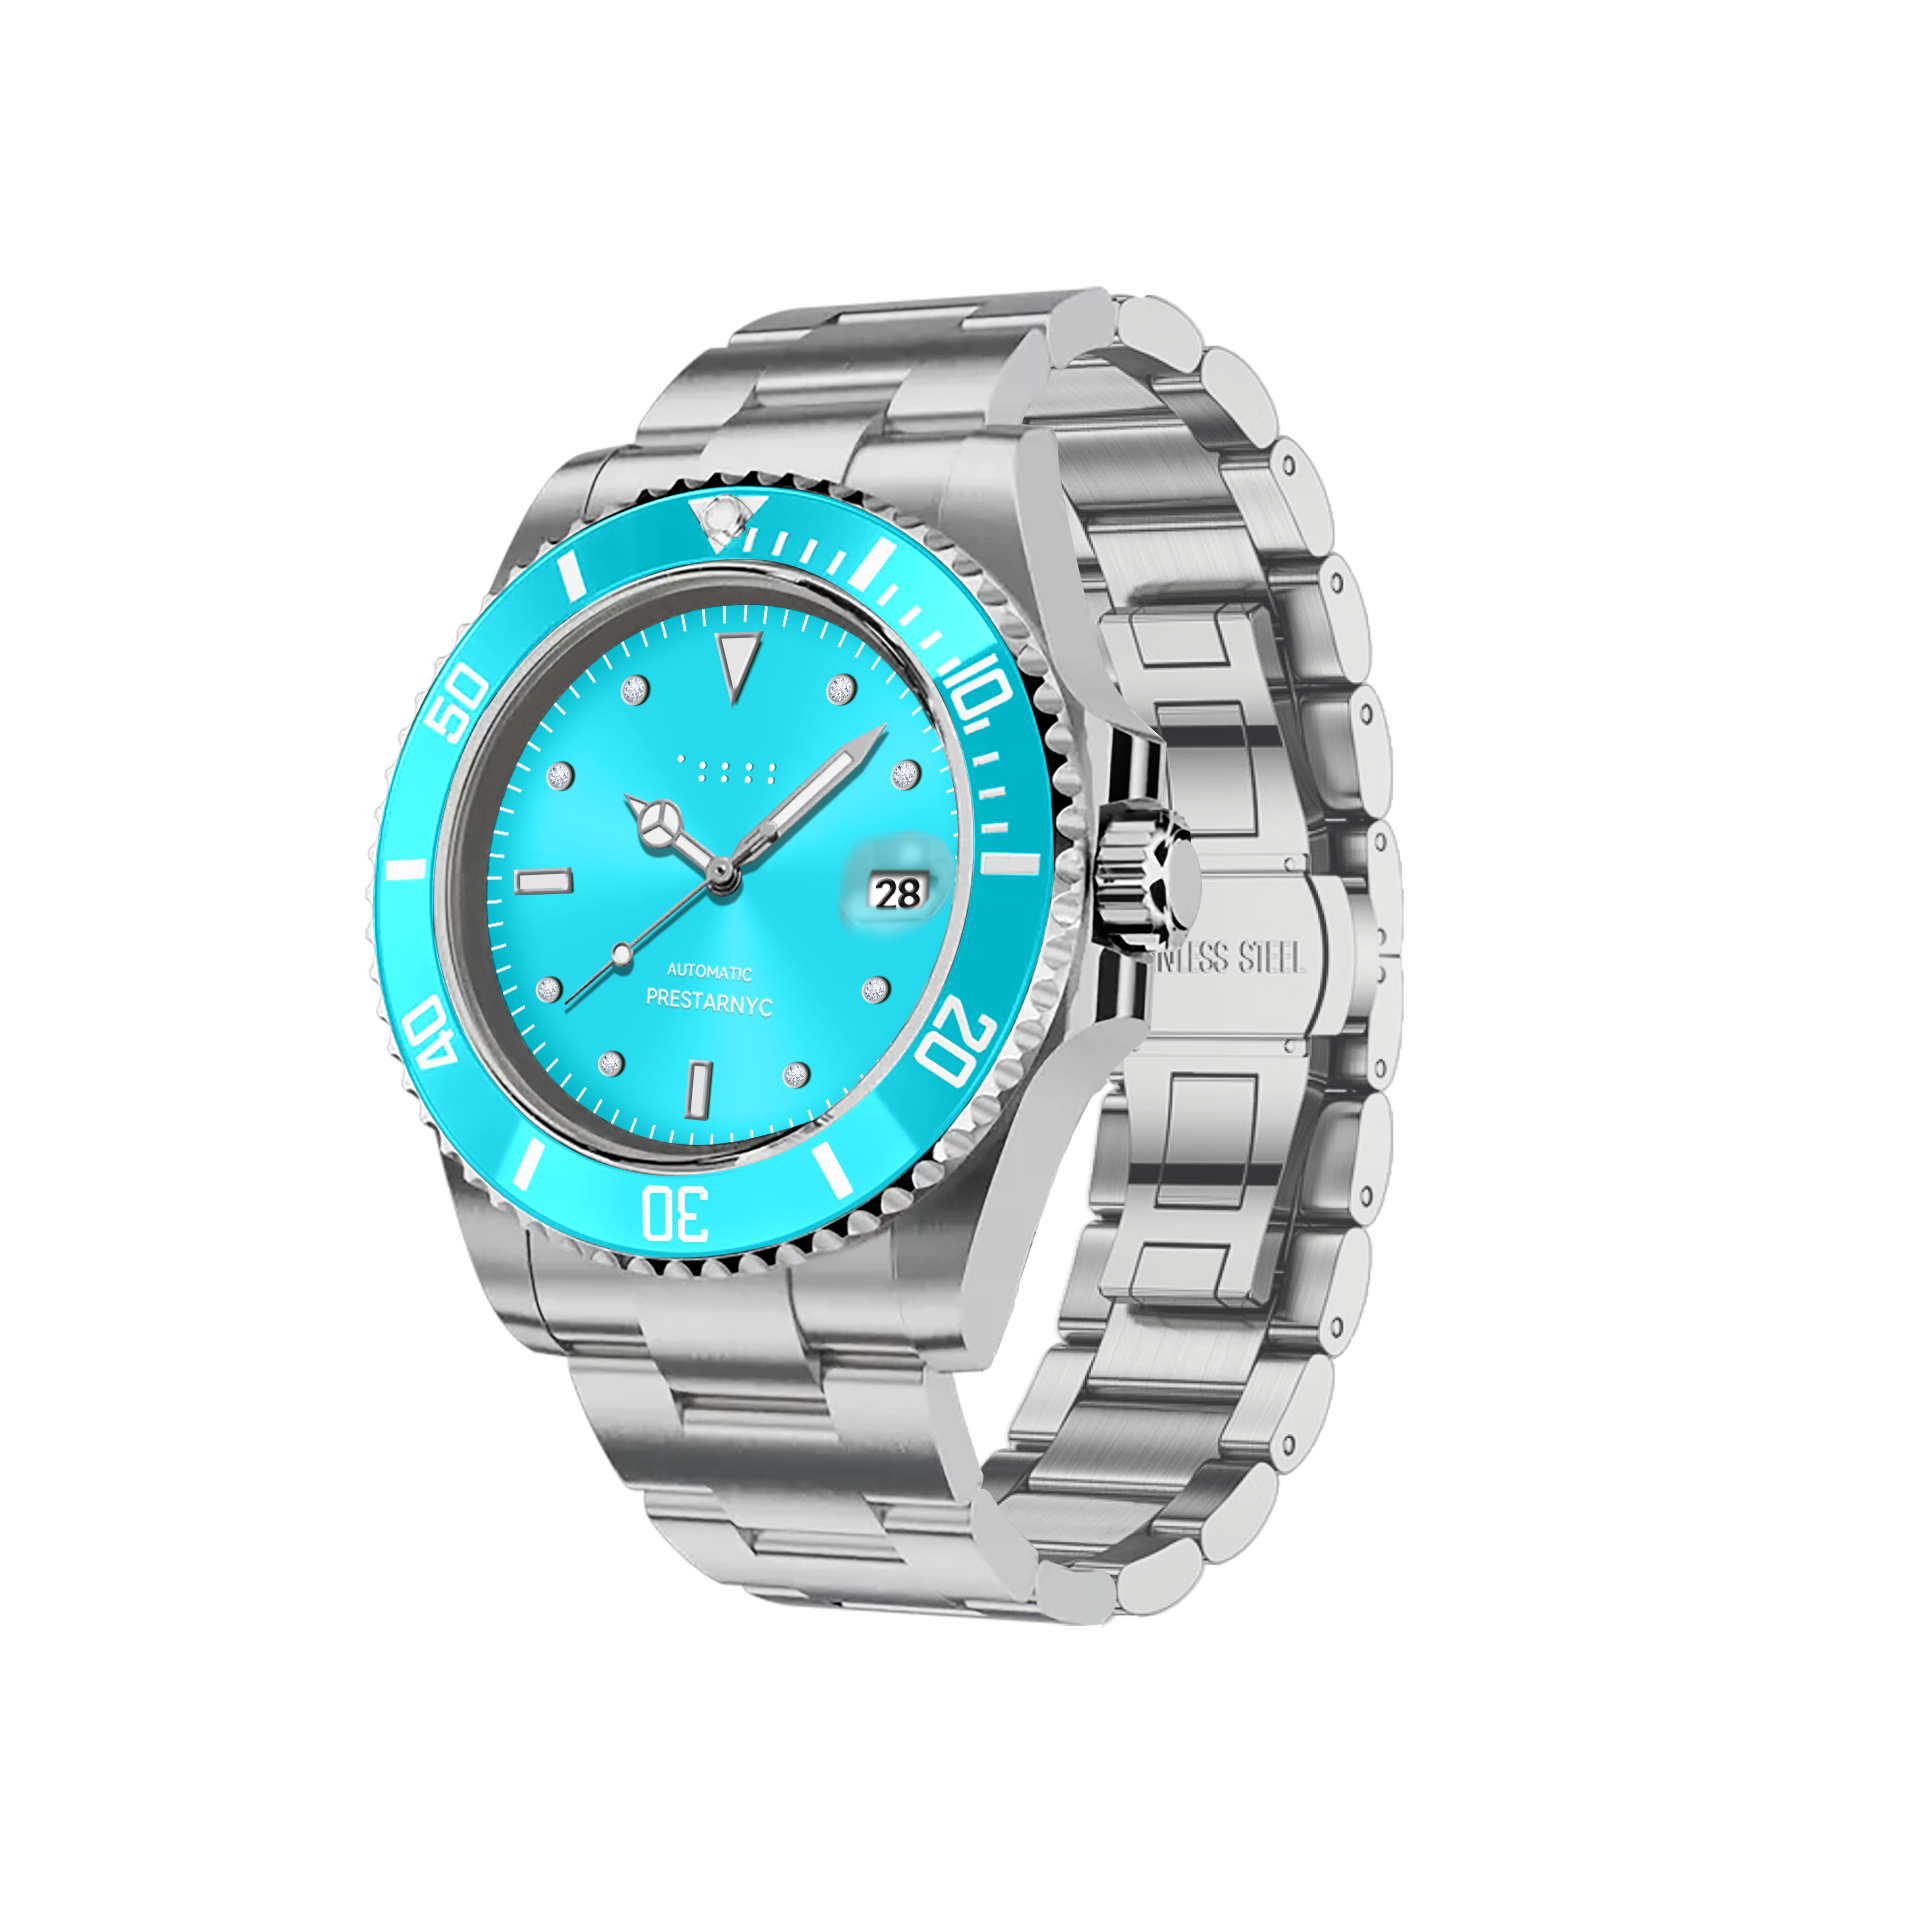 Prestar NYC Aquaman Classic Diamond Watch (Ocean Blue)